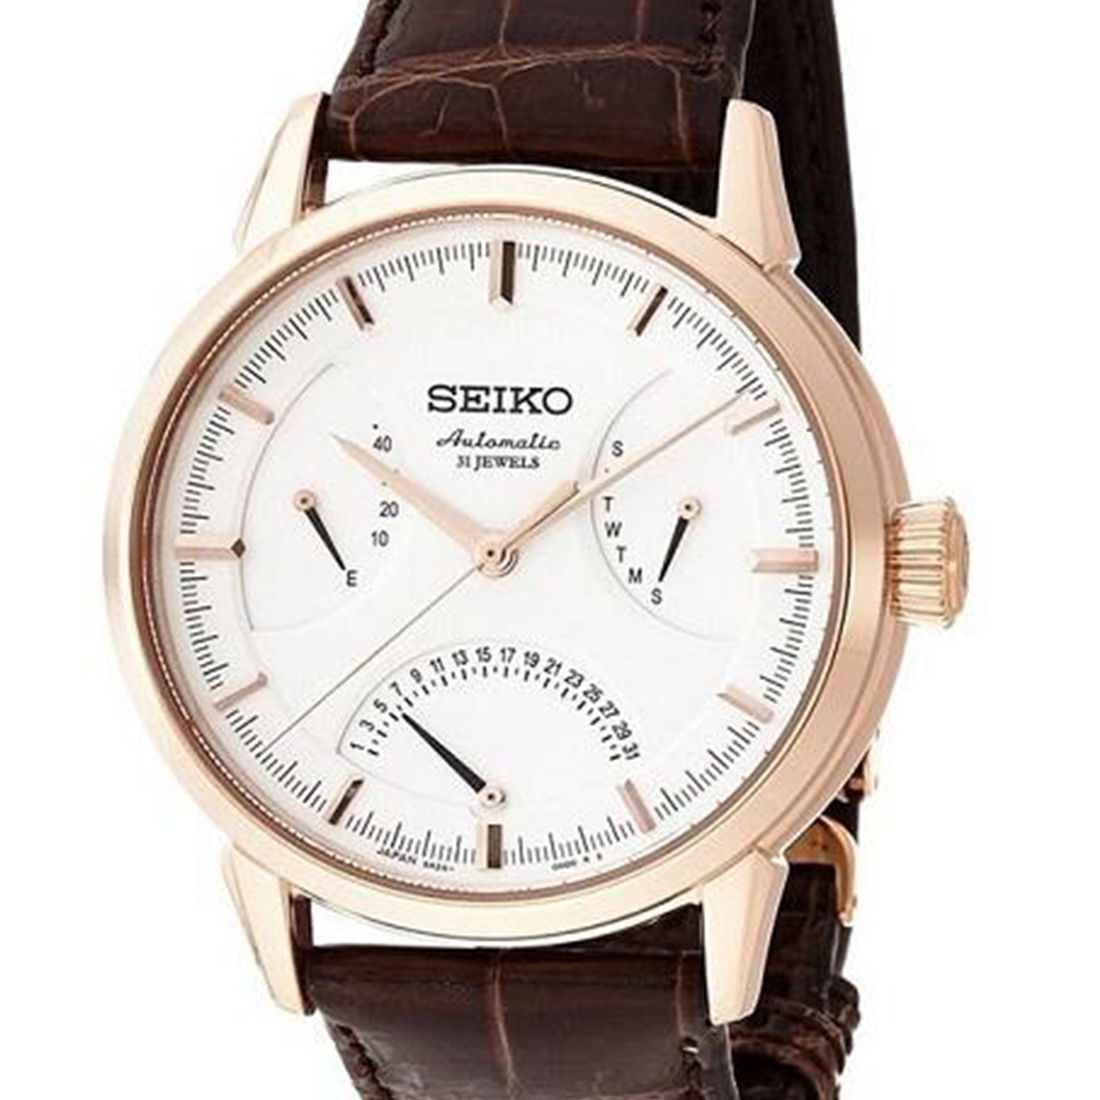 Seiko Presage Automatic 31 Jewels JDM Watch SARD006 (BACKORDER) -Seiko